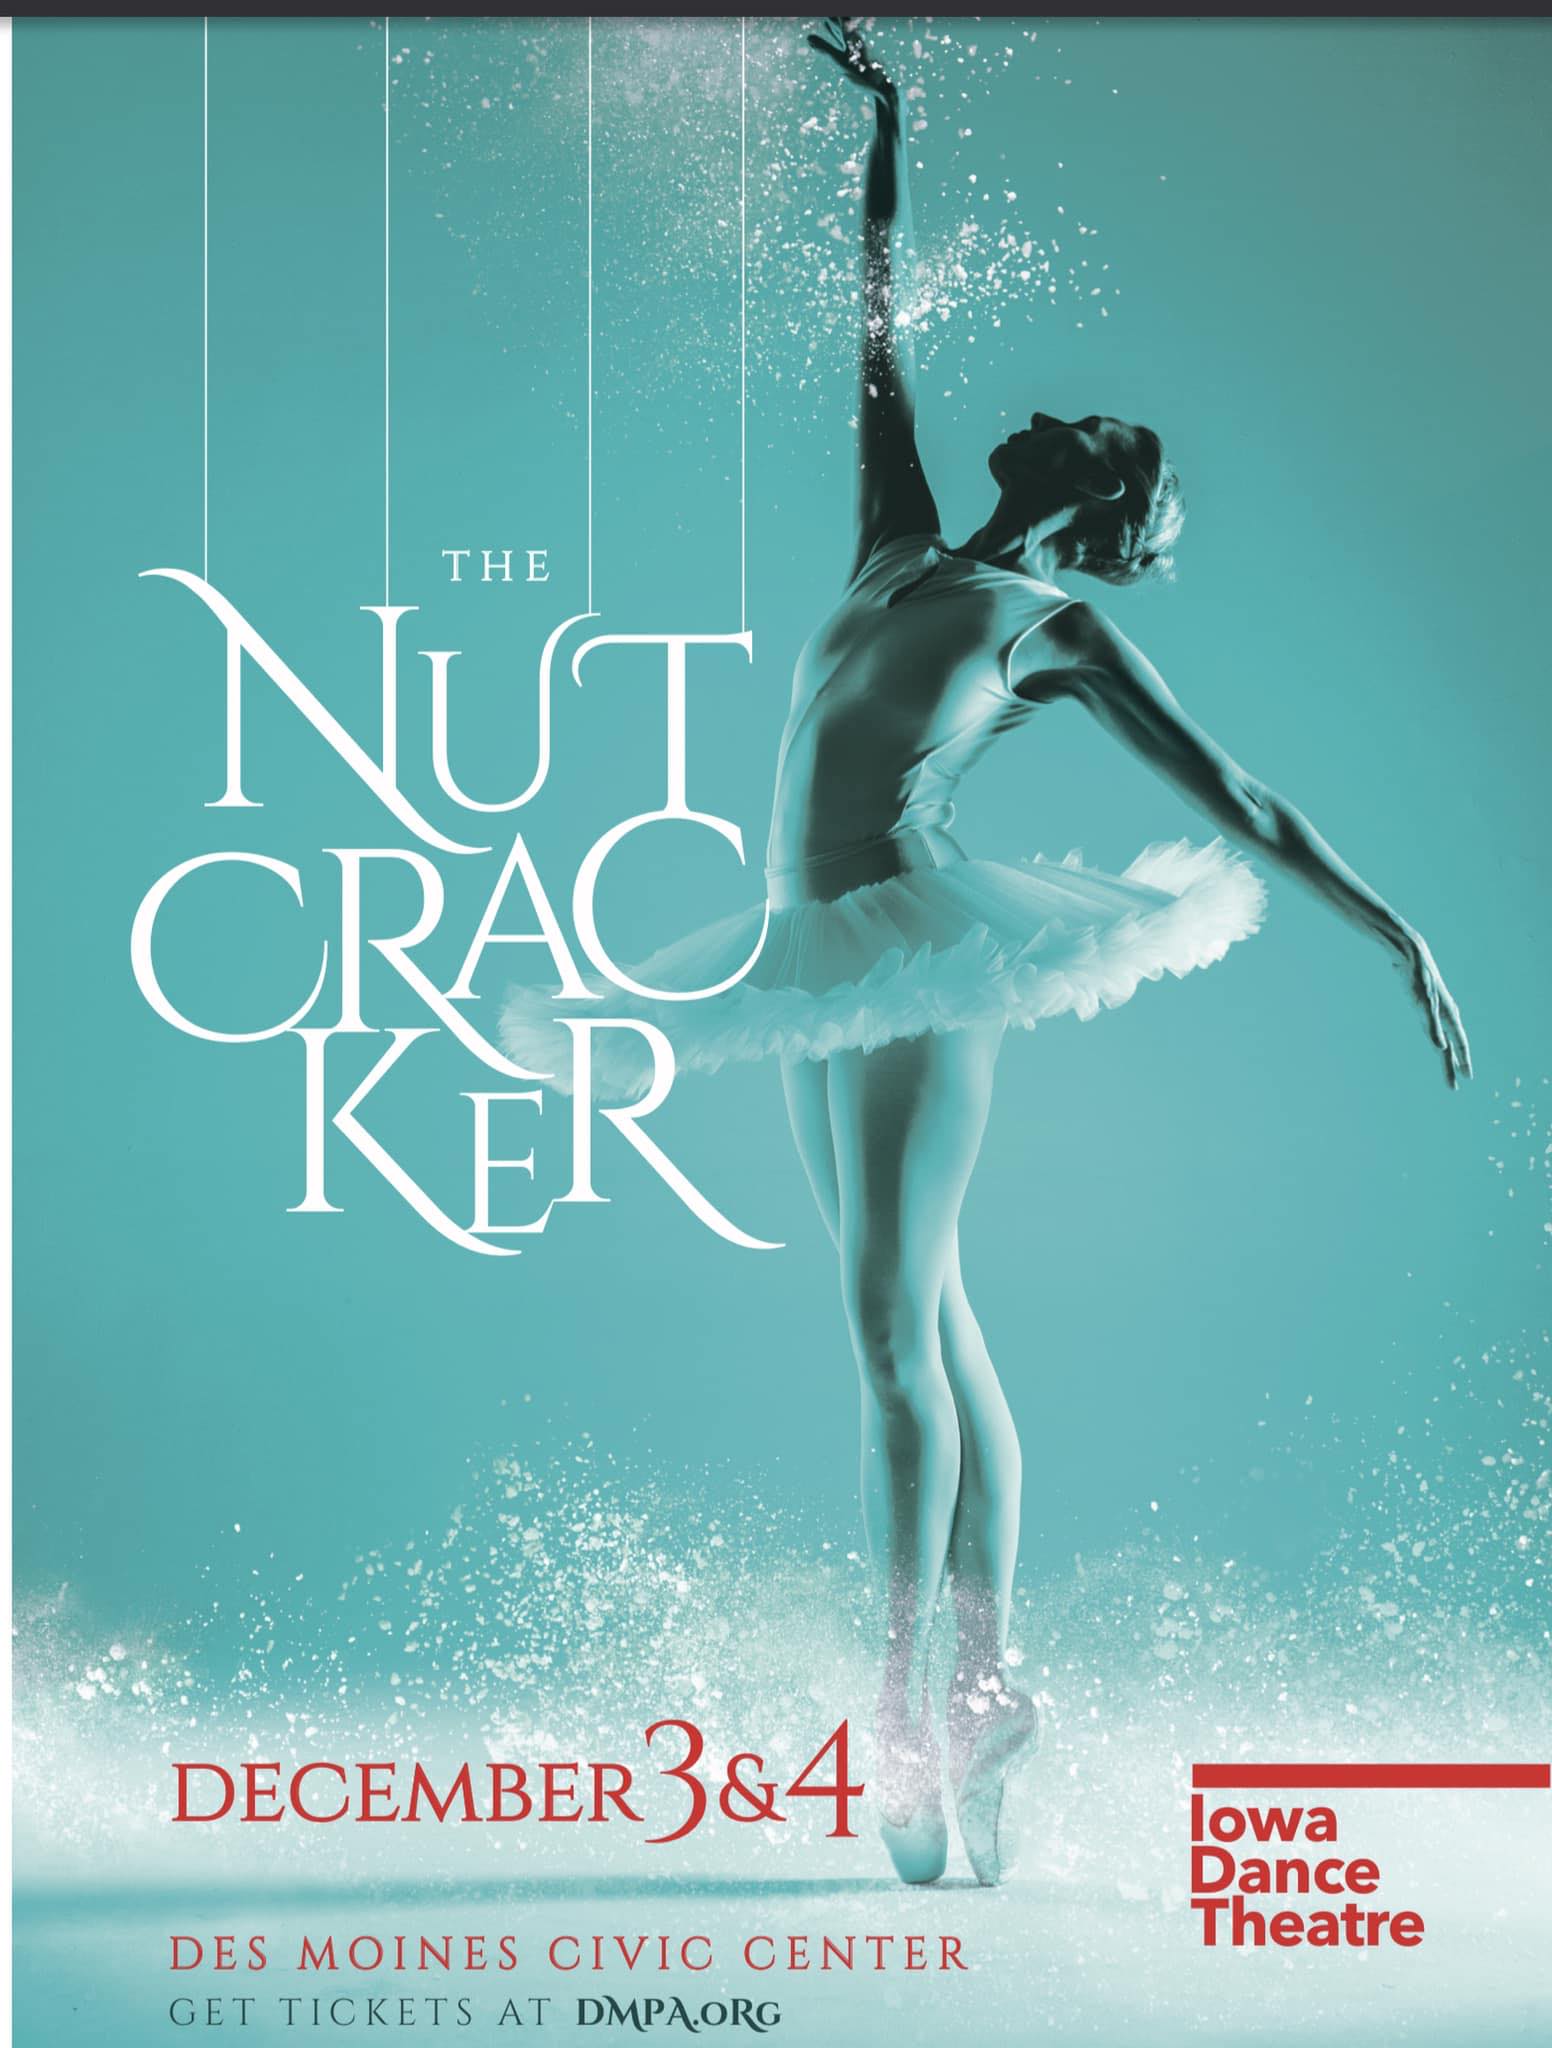 Iowa Dance Theatre: The Nutcracker at Des Monies Civic Center